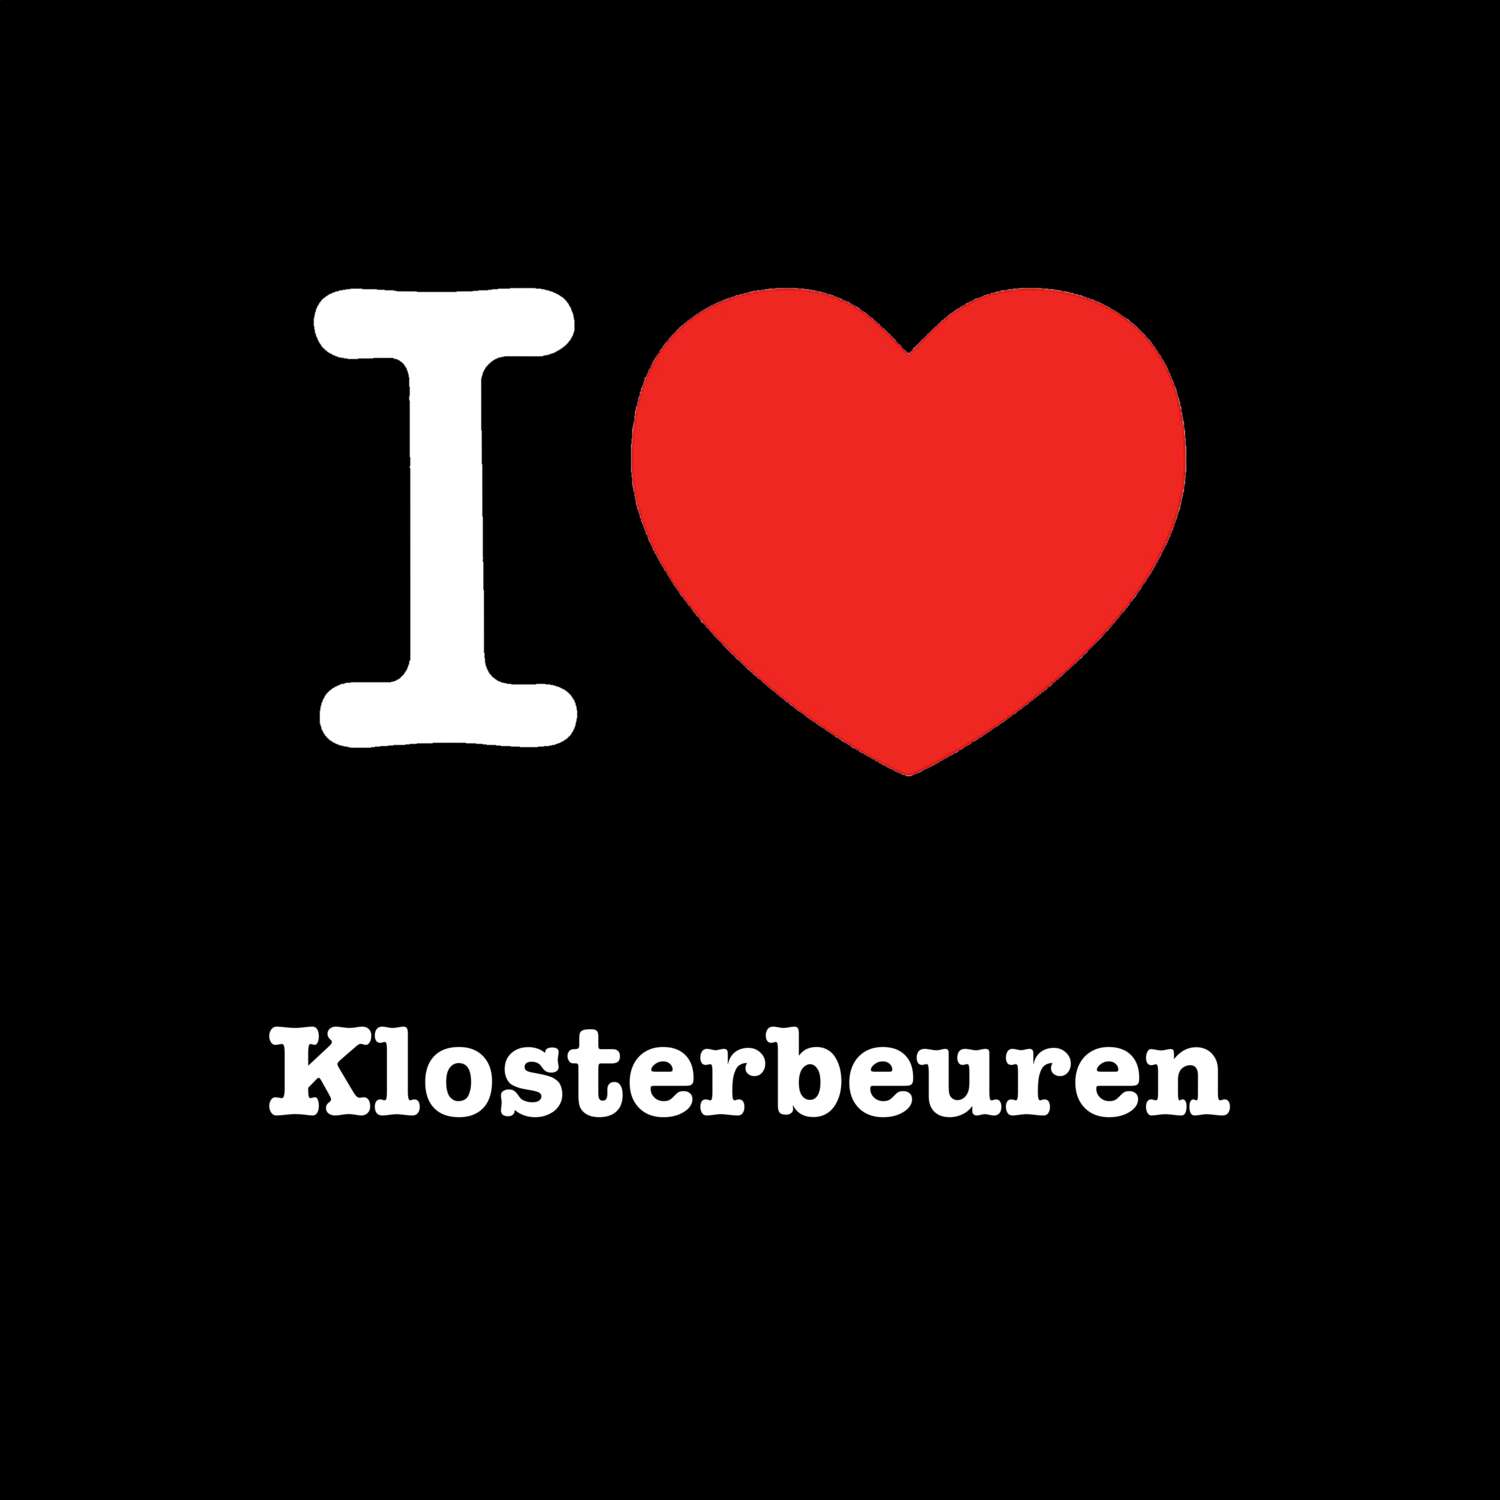 Klosterbeuren T-Shirt »I love«